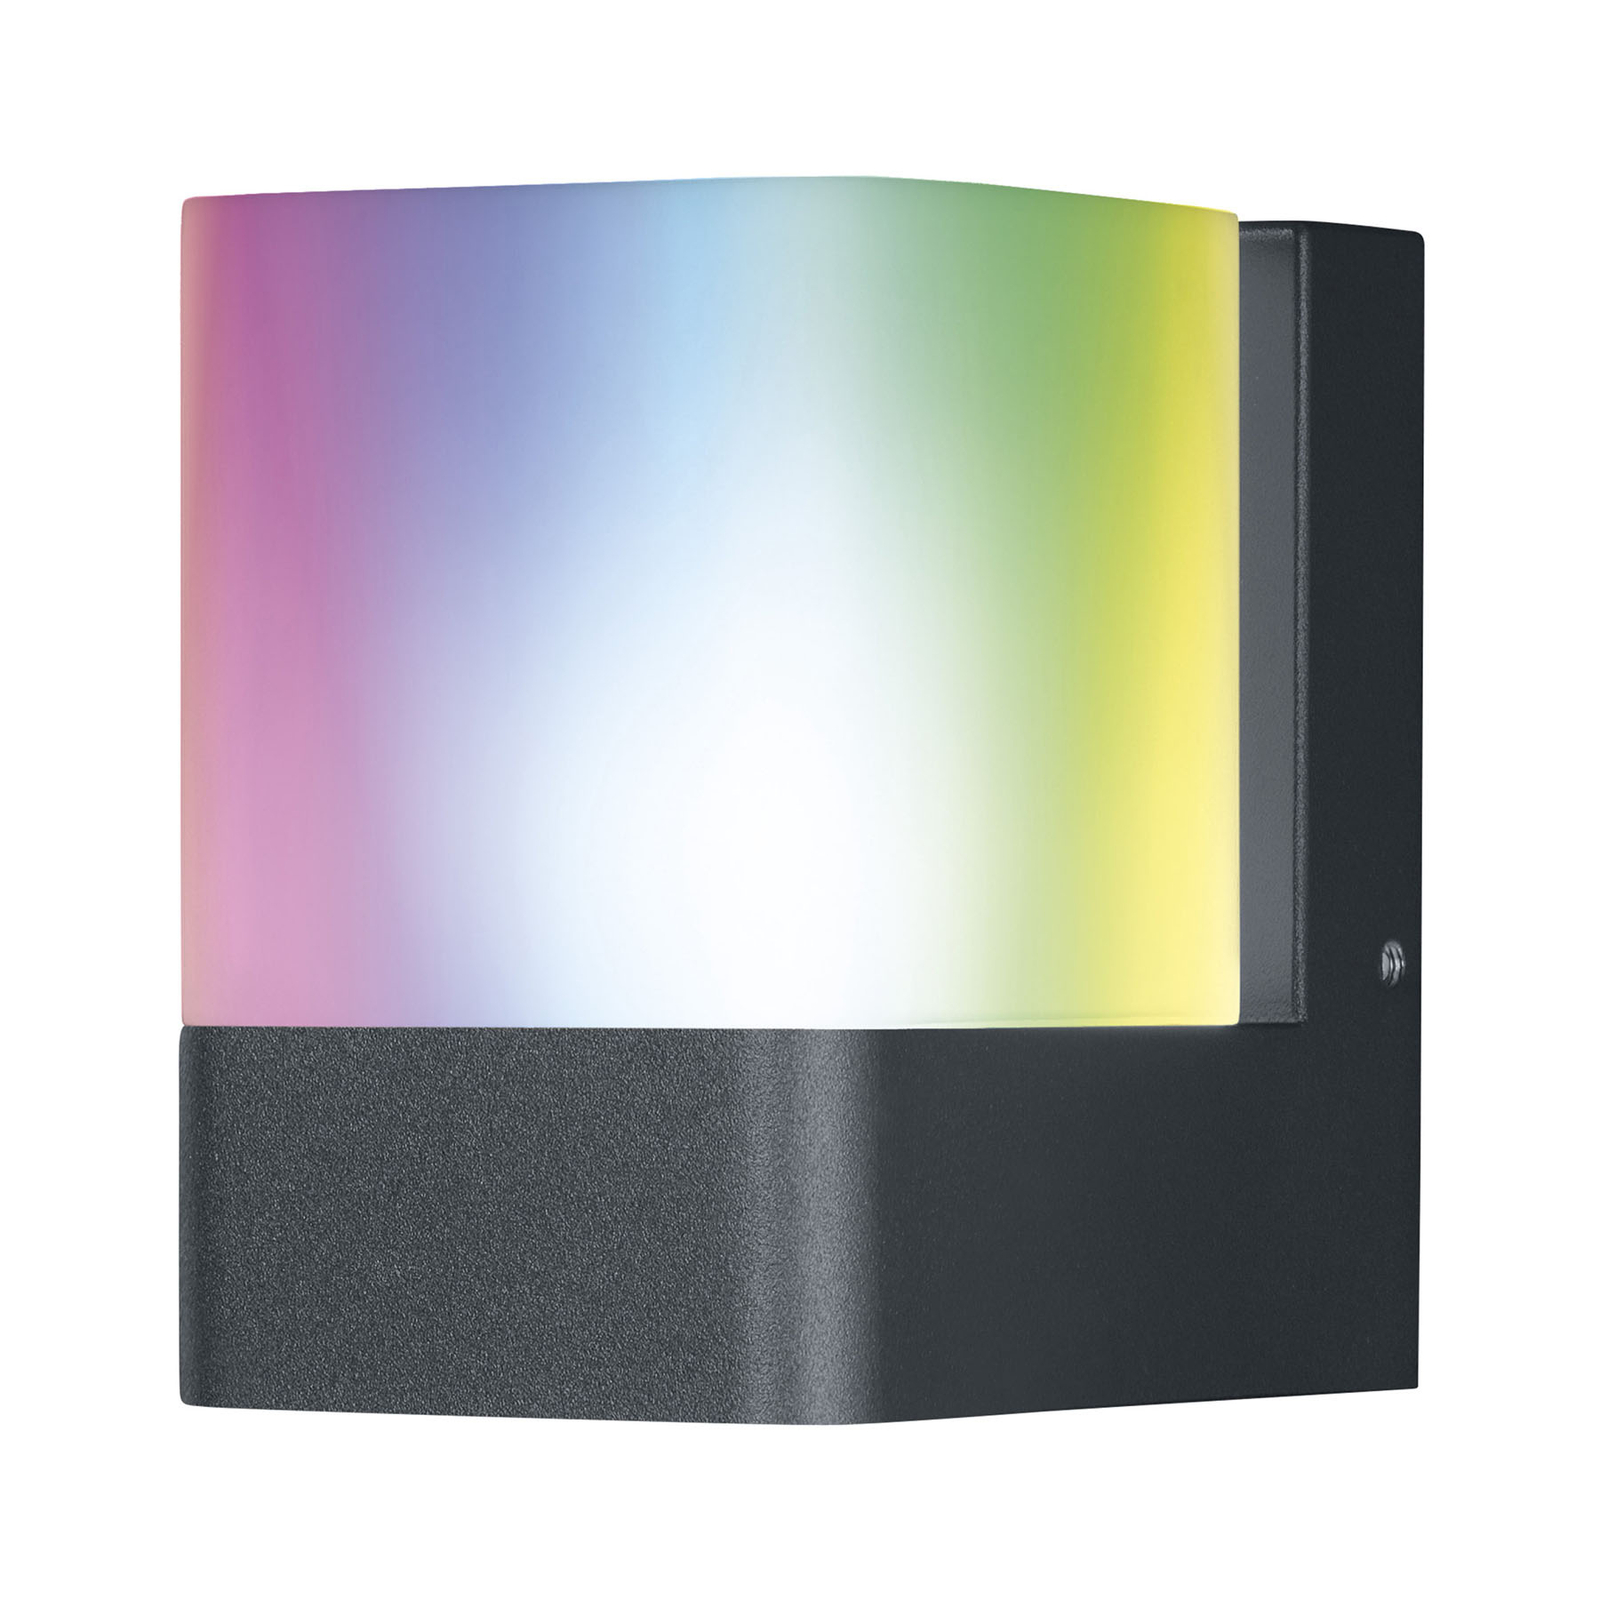 LEDVANCE SMART+ WiFi Cube LED-væglampe RGBW up